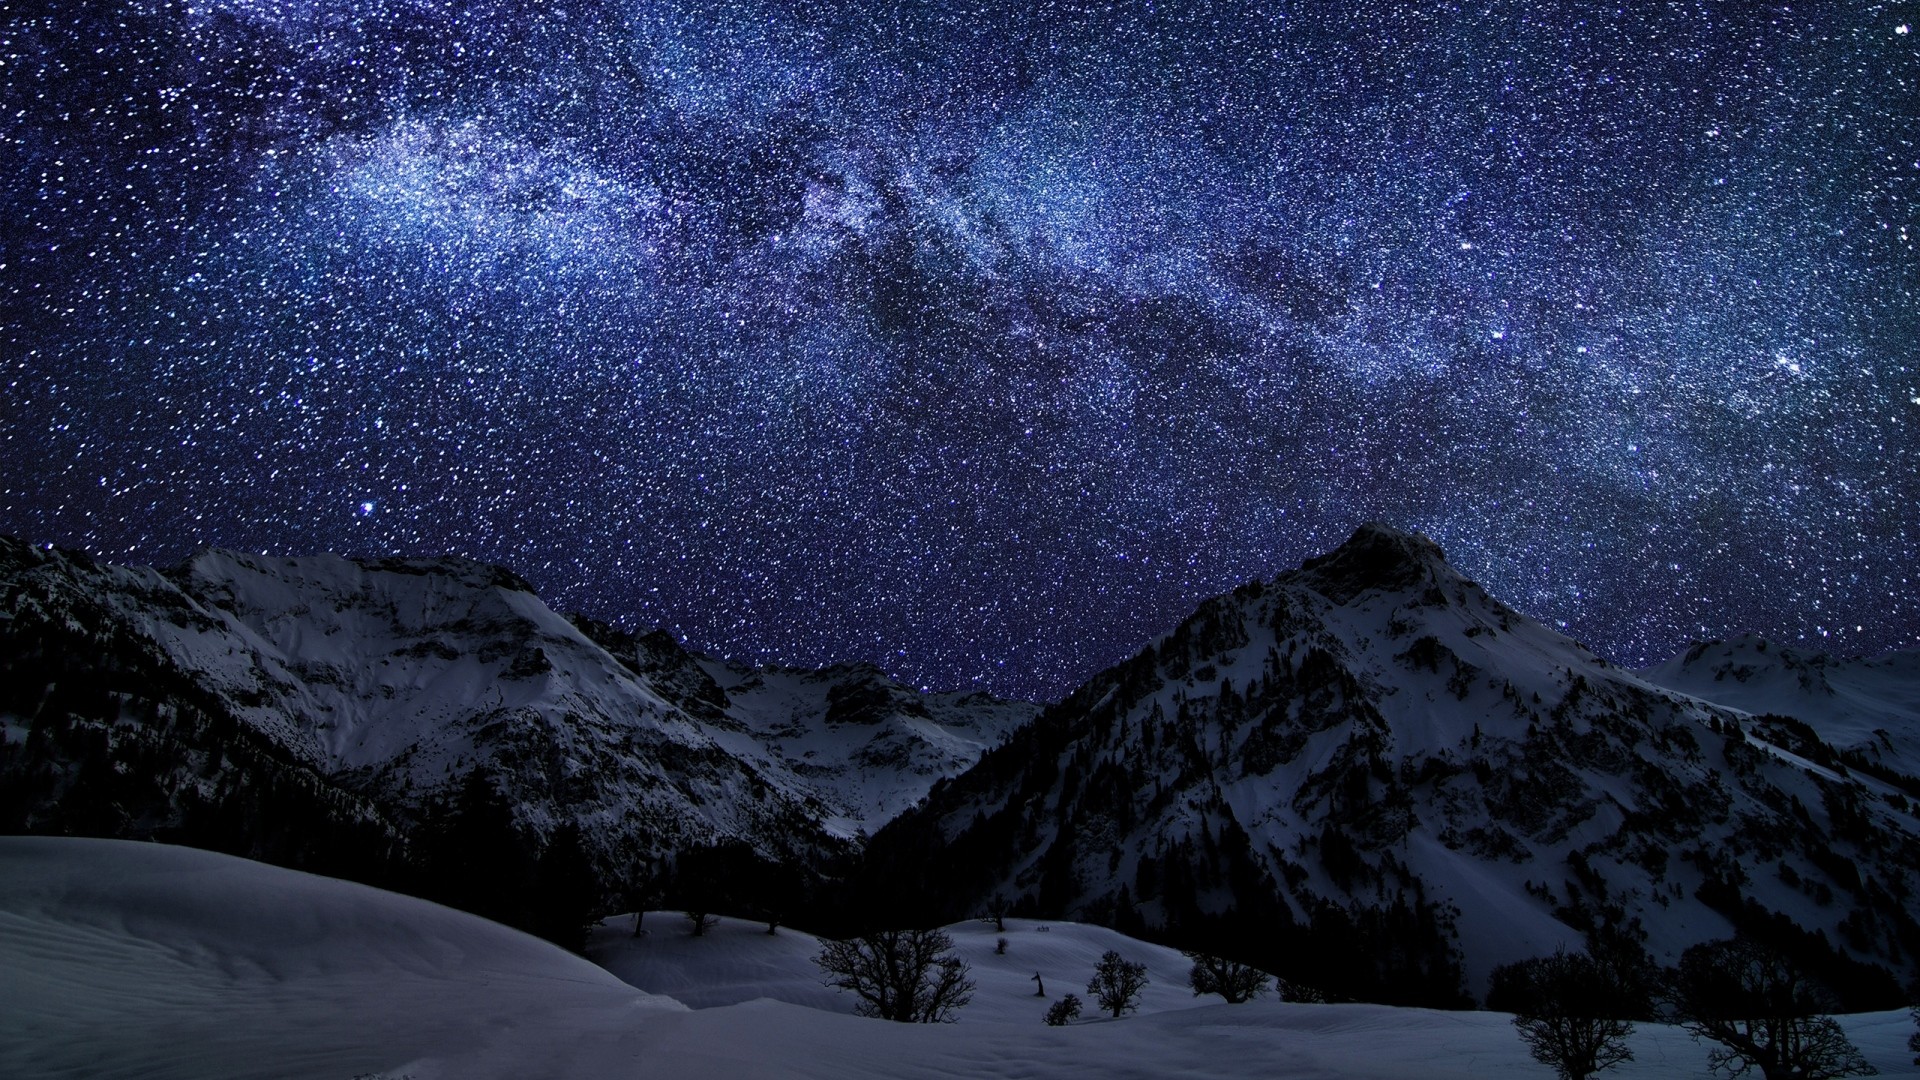 Winter Night Sky Wallpaper images